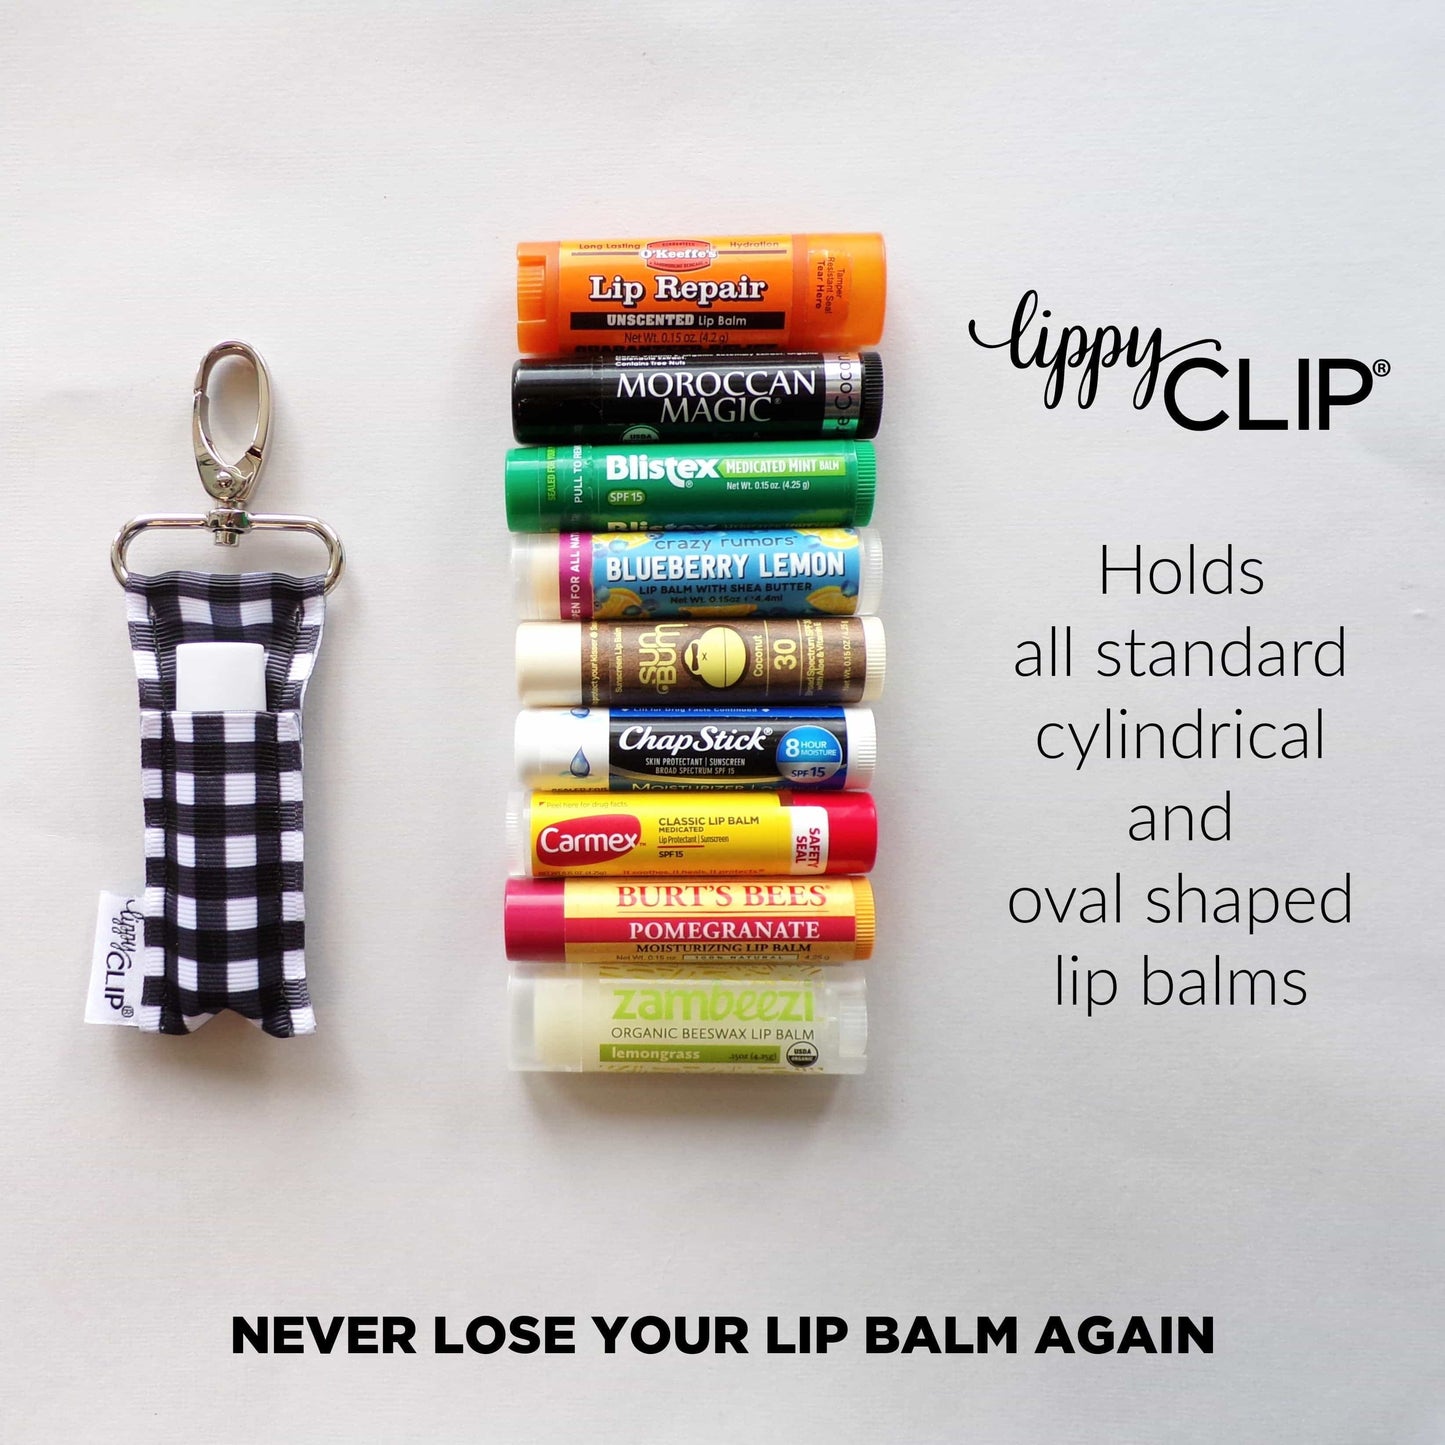 Alley Cat LippyClip® Lip Balm Holder for Chapstick